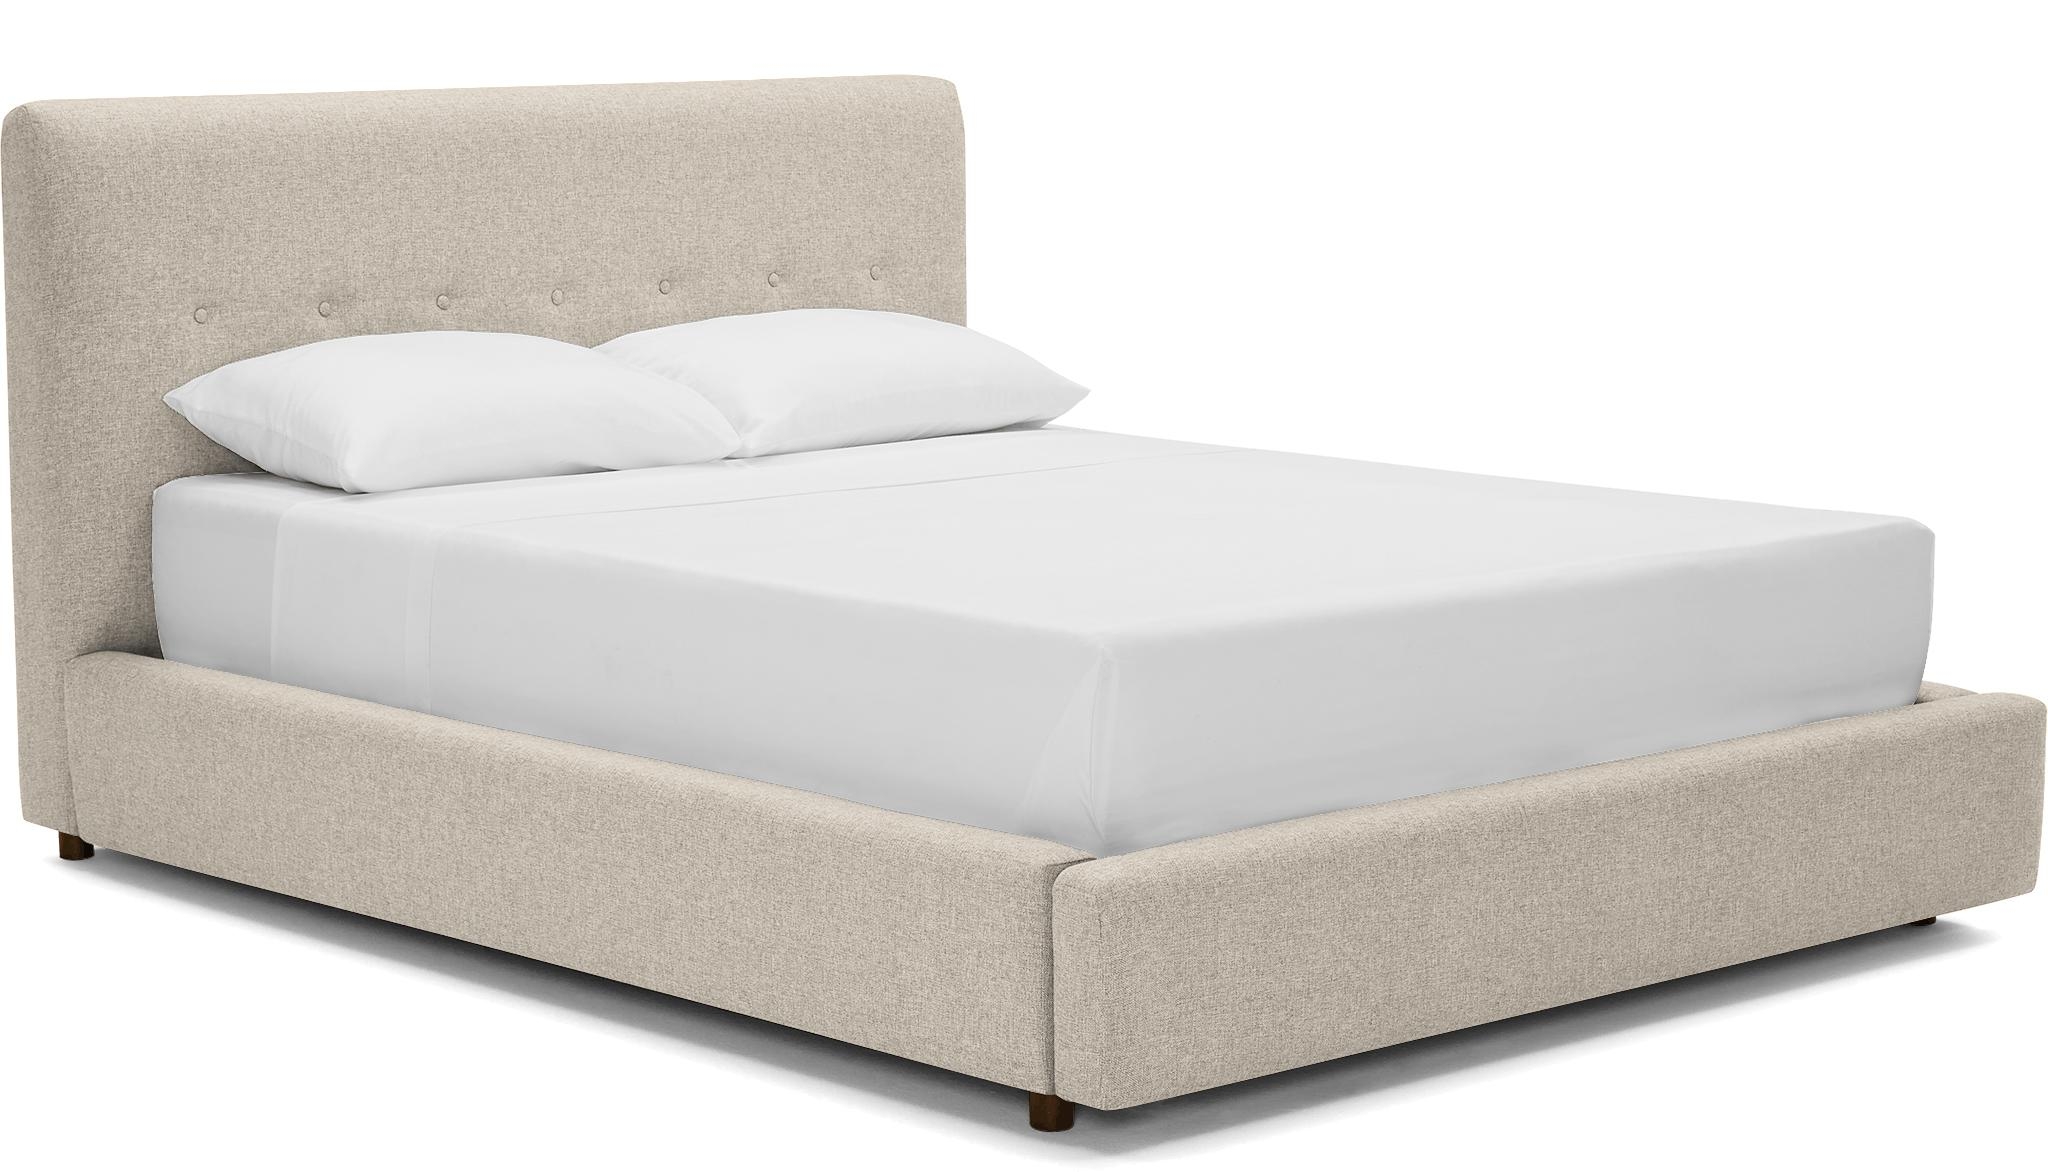 Beige/White Alvin Mid Century Modern Storage Bed - Cody Sandstone - Mocha - Cal King - Image 1